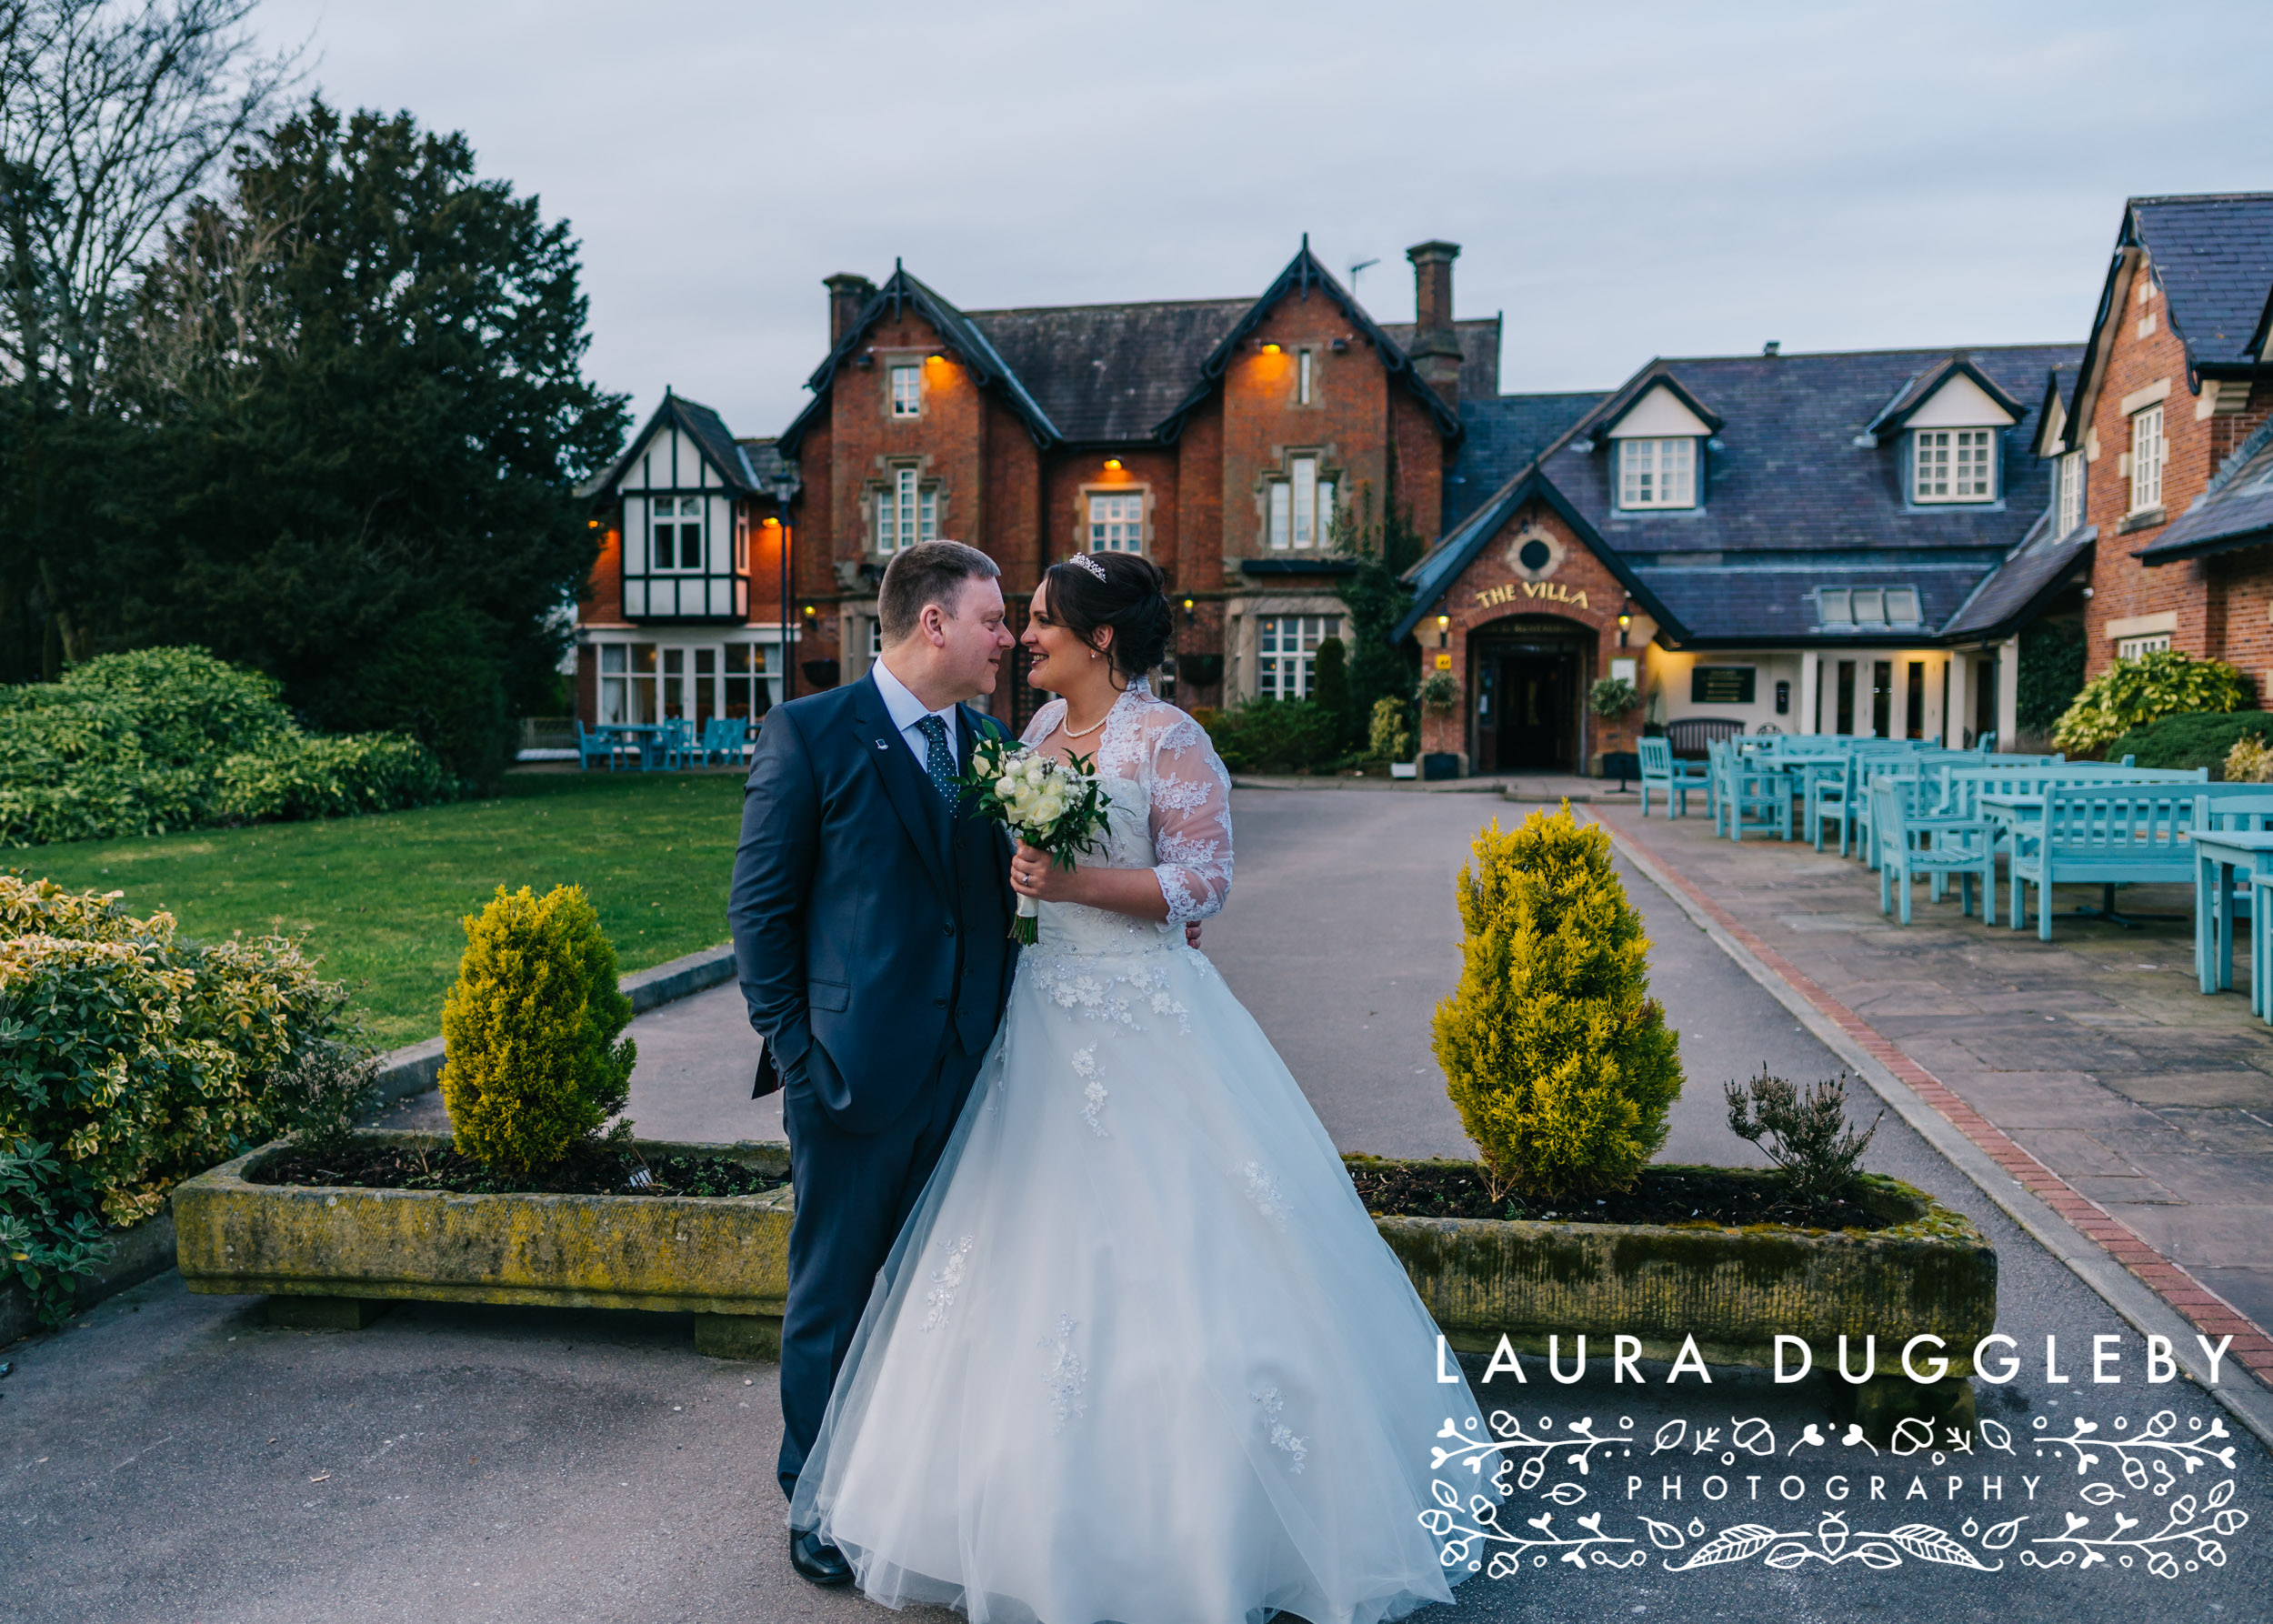 The Villa Hotel - Wrea Green Lancashire Wedding Photographer16